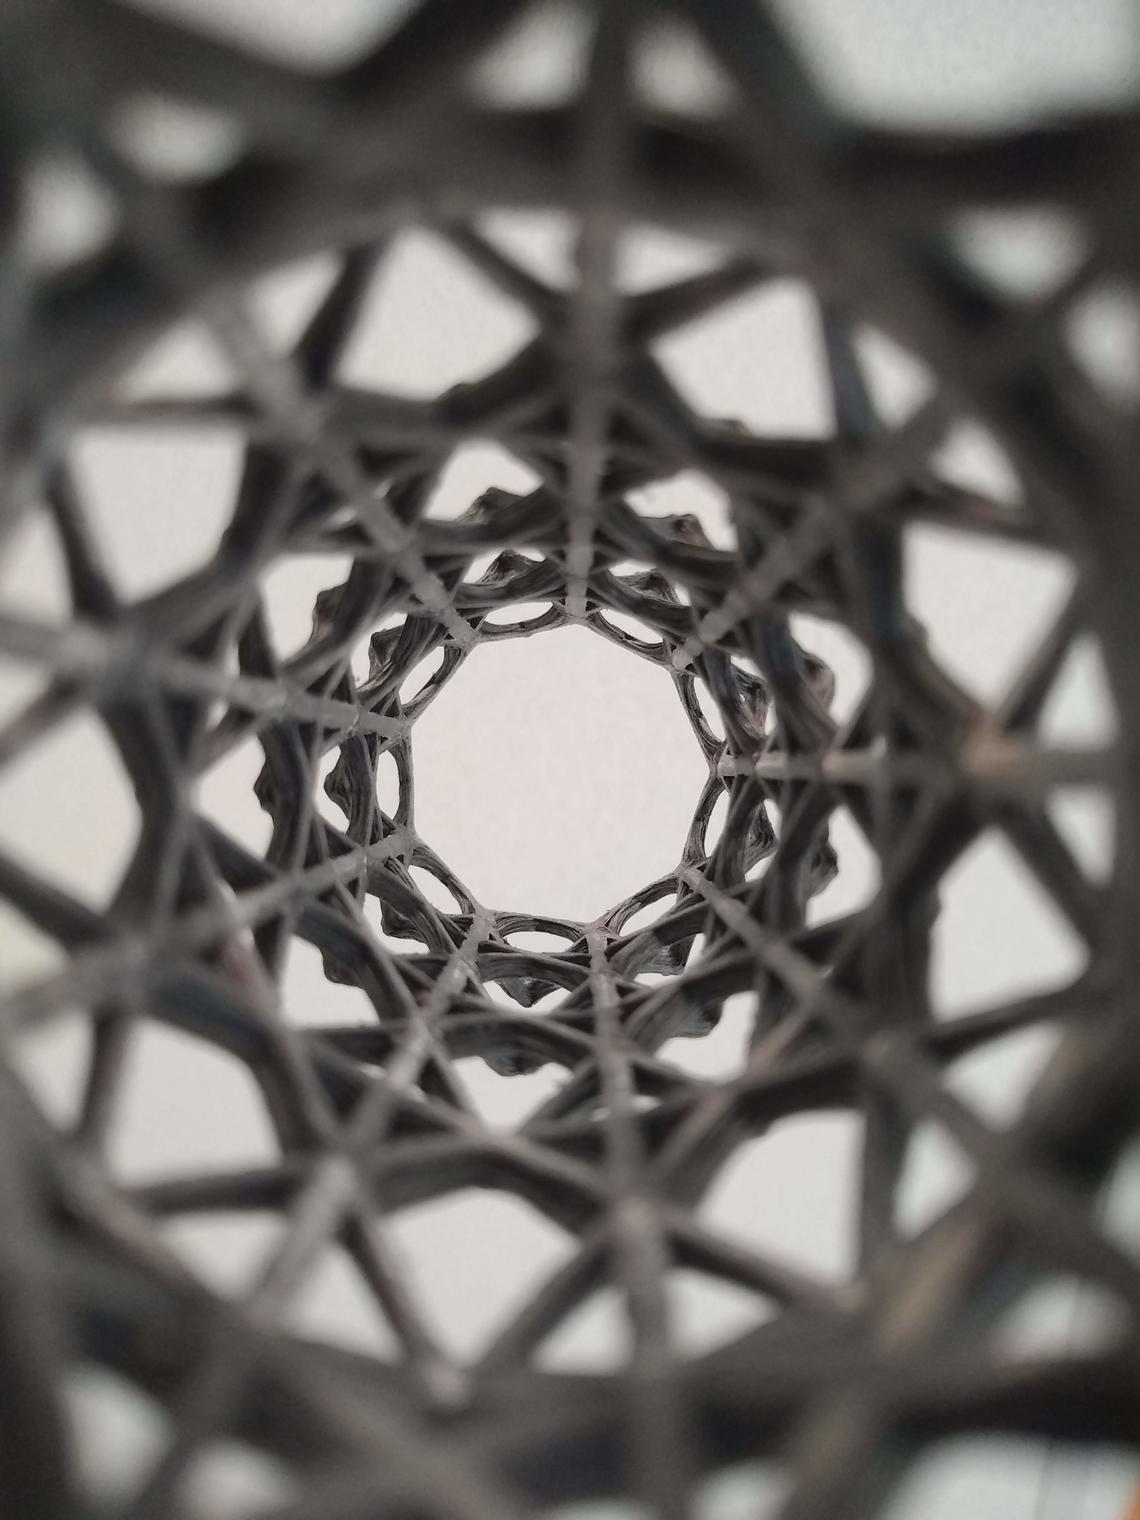 Interior View of 3D printed material